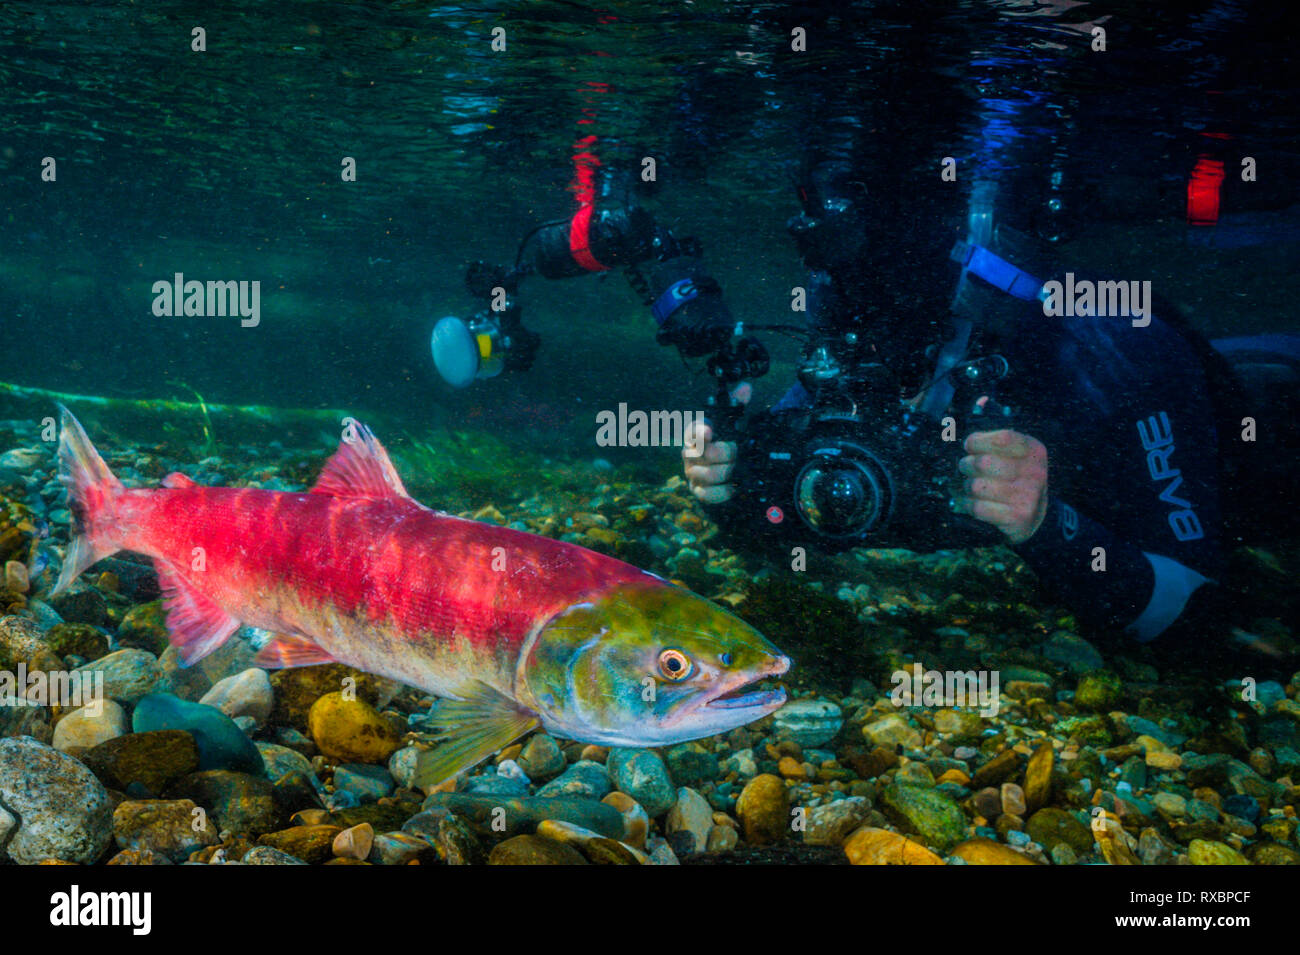 Female Sockeye salmon, Oncorhynchus nerka, with underwater photographer, Adams River, Tsútswecw Provincial Park, British Columbia, Canada Stock Photo